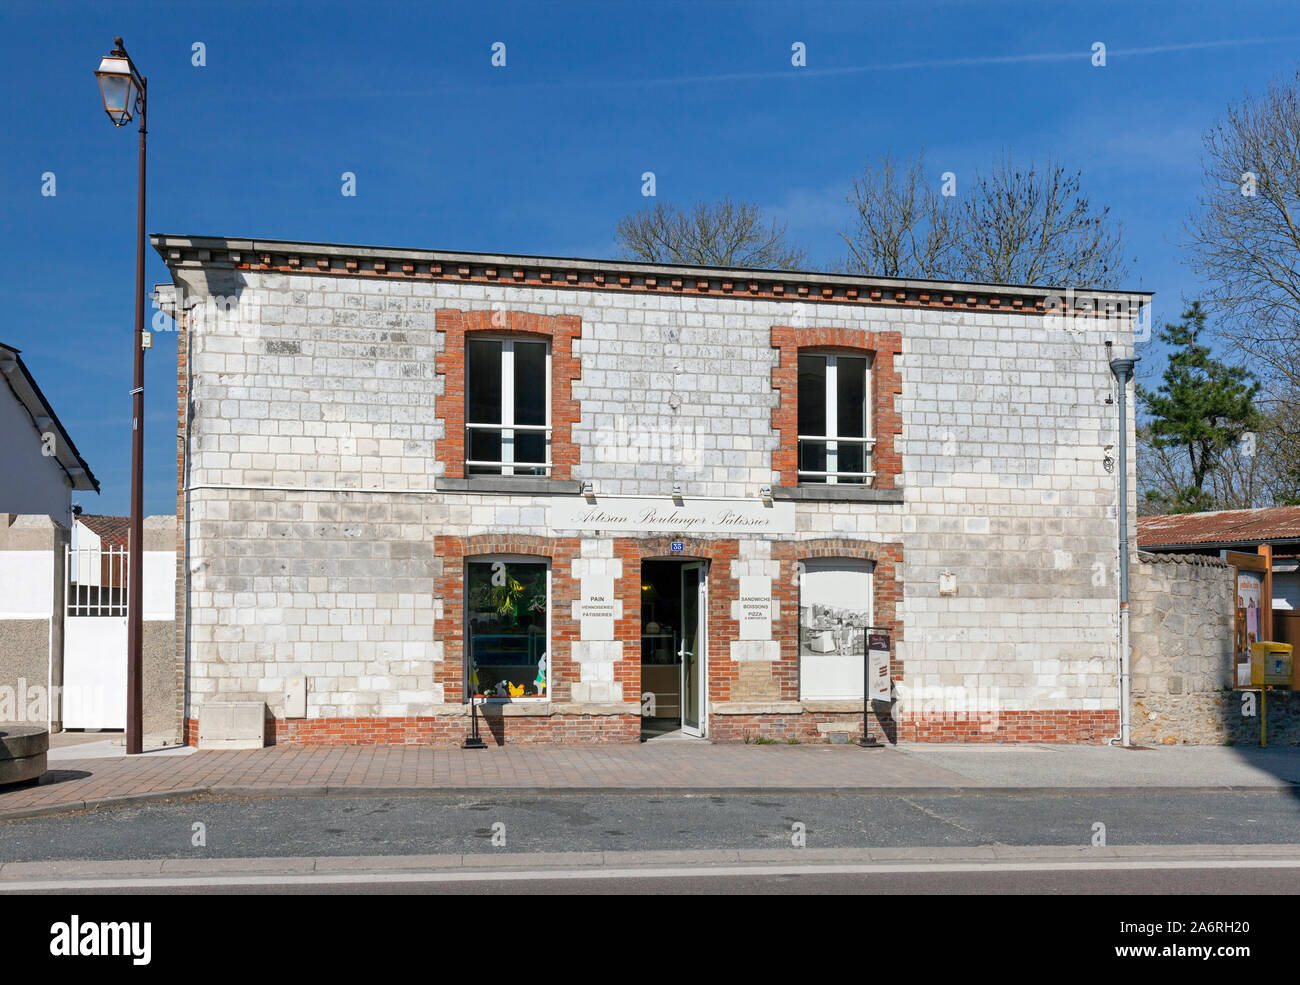 Europe, France, Grand Est, L'Epine, Artisan Boulanger Patissier (Baker's Shop) on Rue du Luxembourg Stock Photo